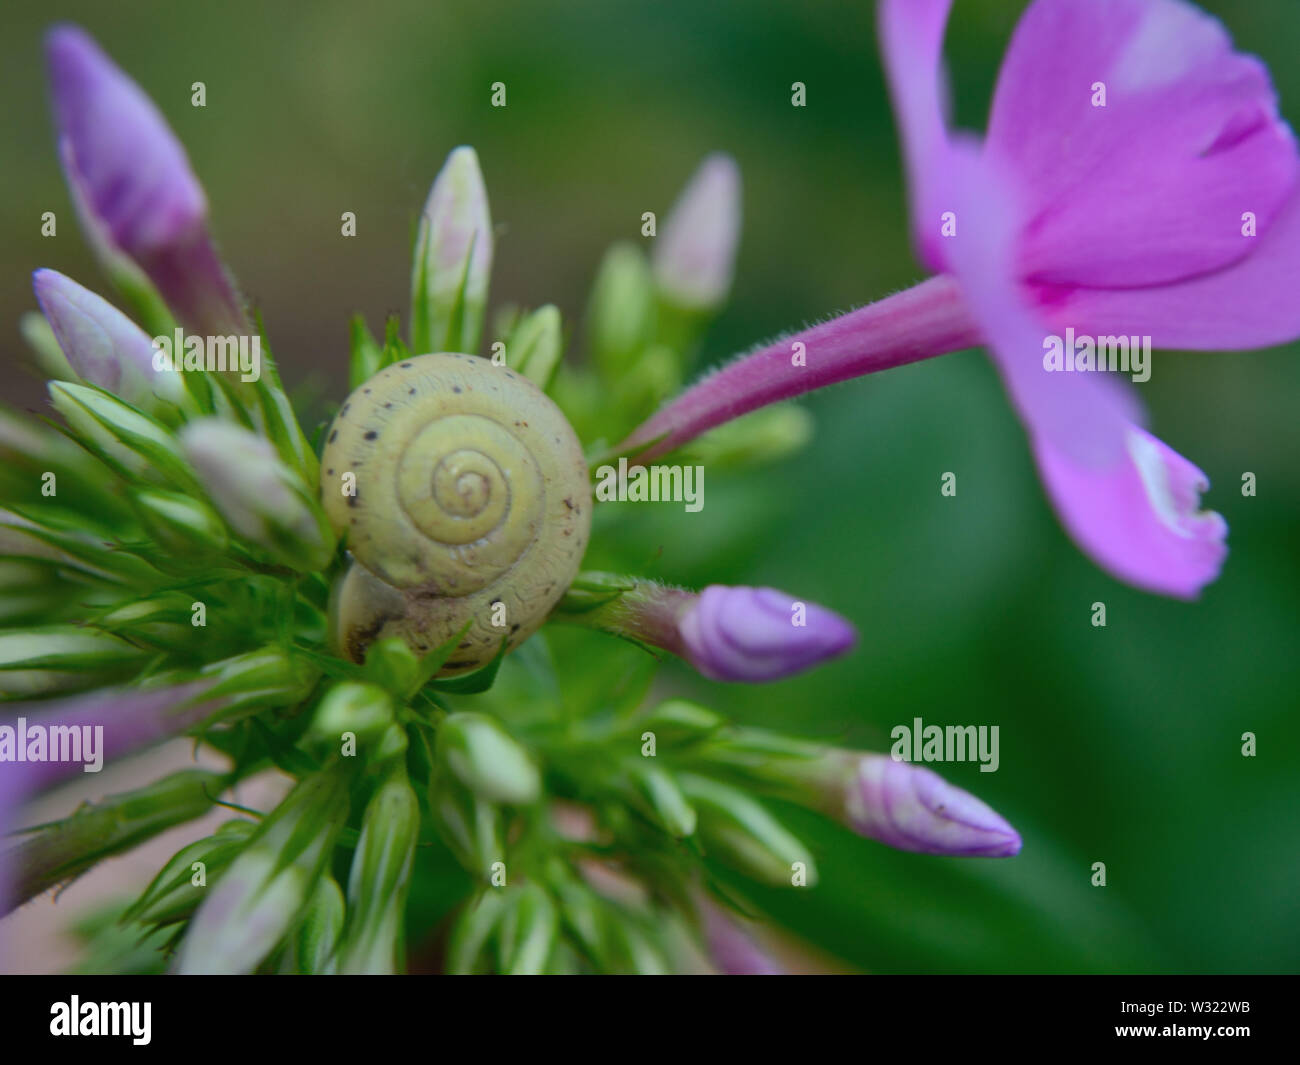 Snail on a phlox flower Stock Photo